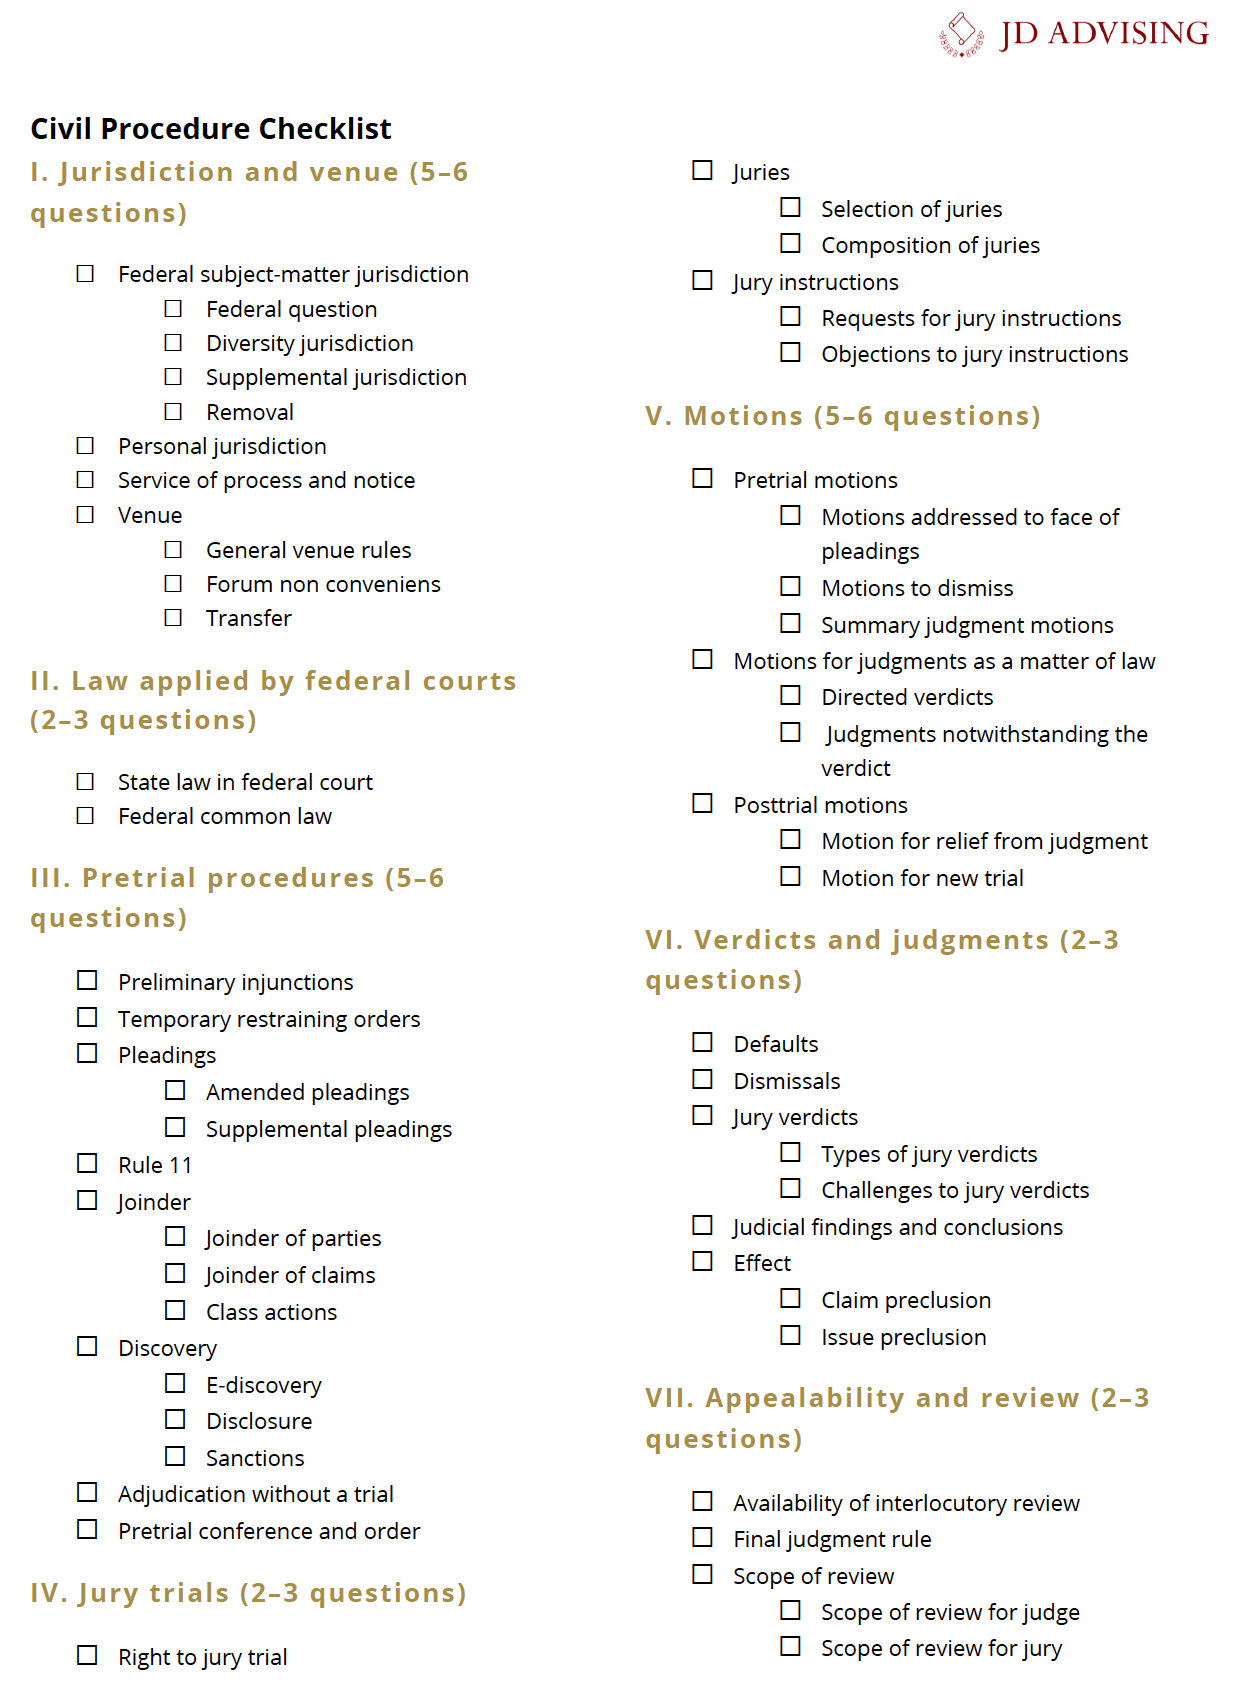 Civil Procedure Checklist